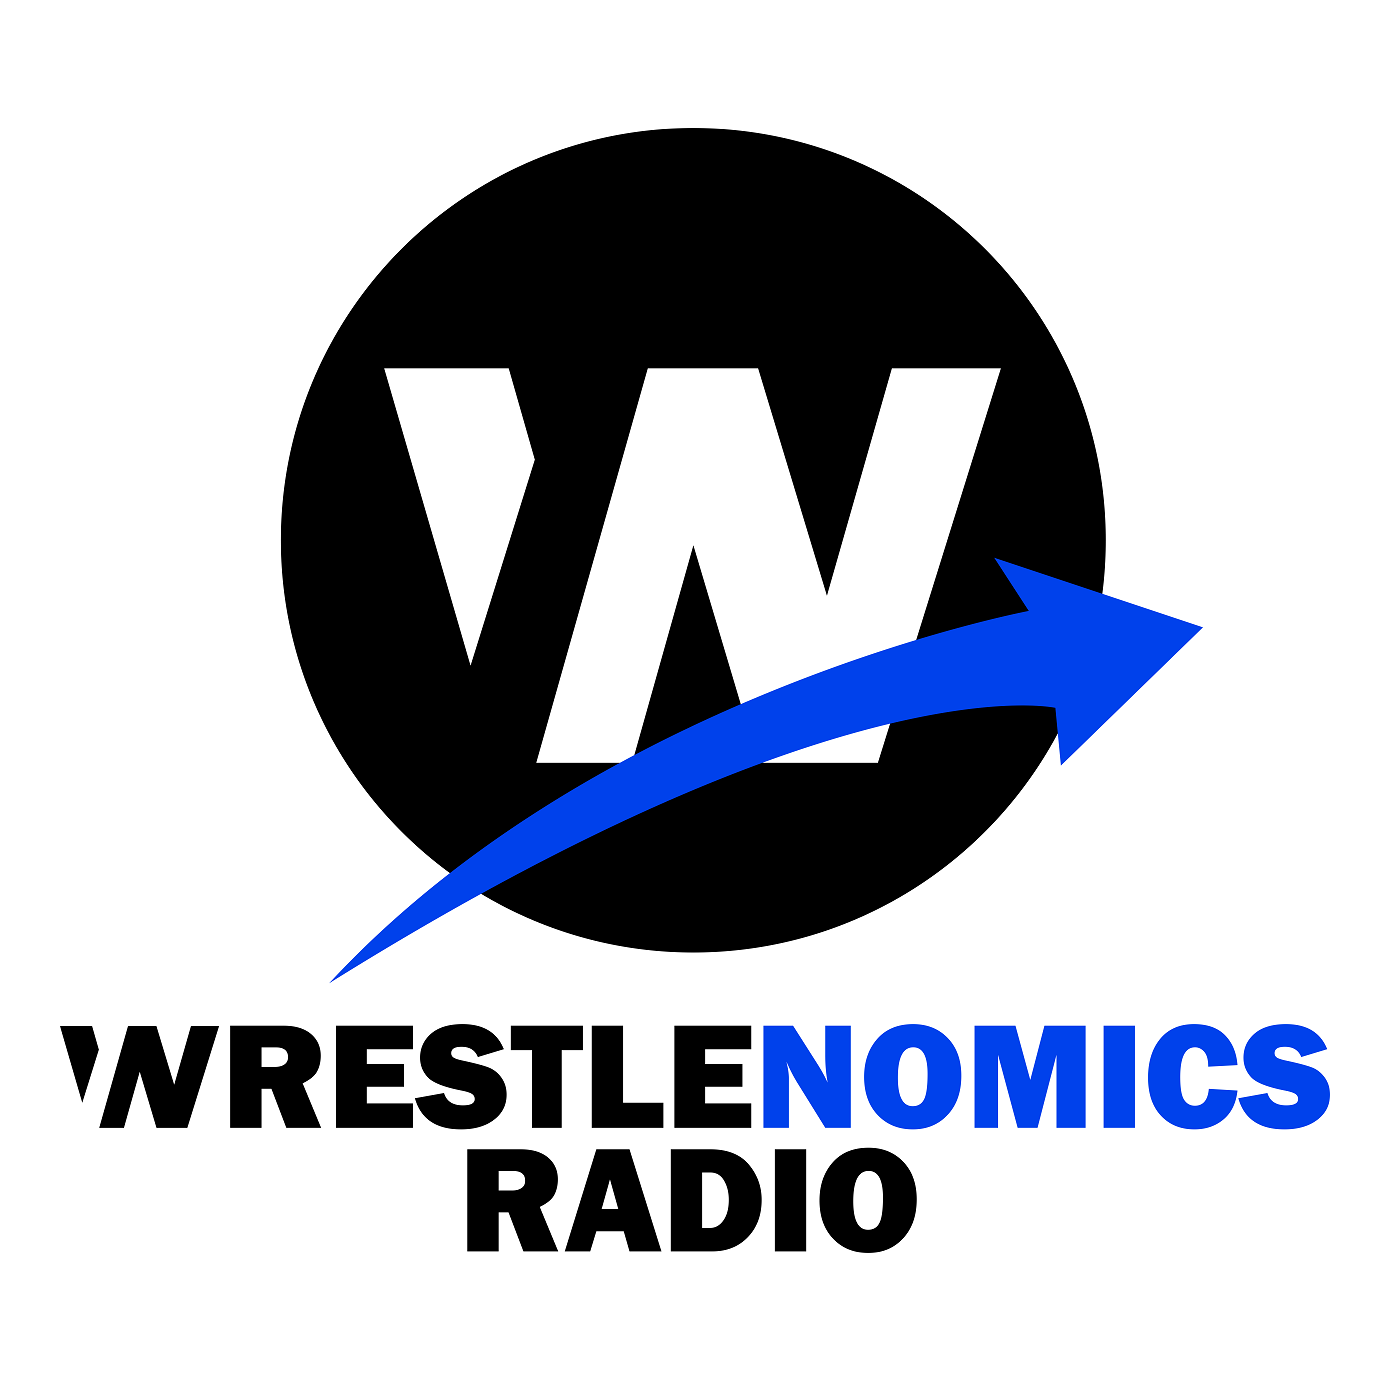 66: Wrestlenomics Radio: CMLL Anniversary talk with live report from Will From Texas (goodhelmet)